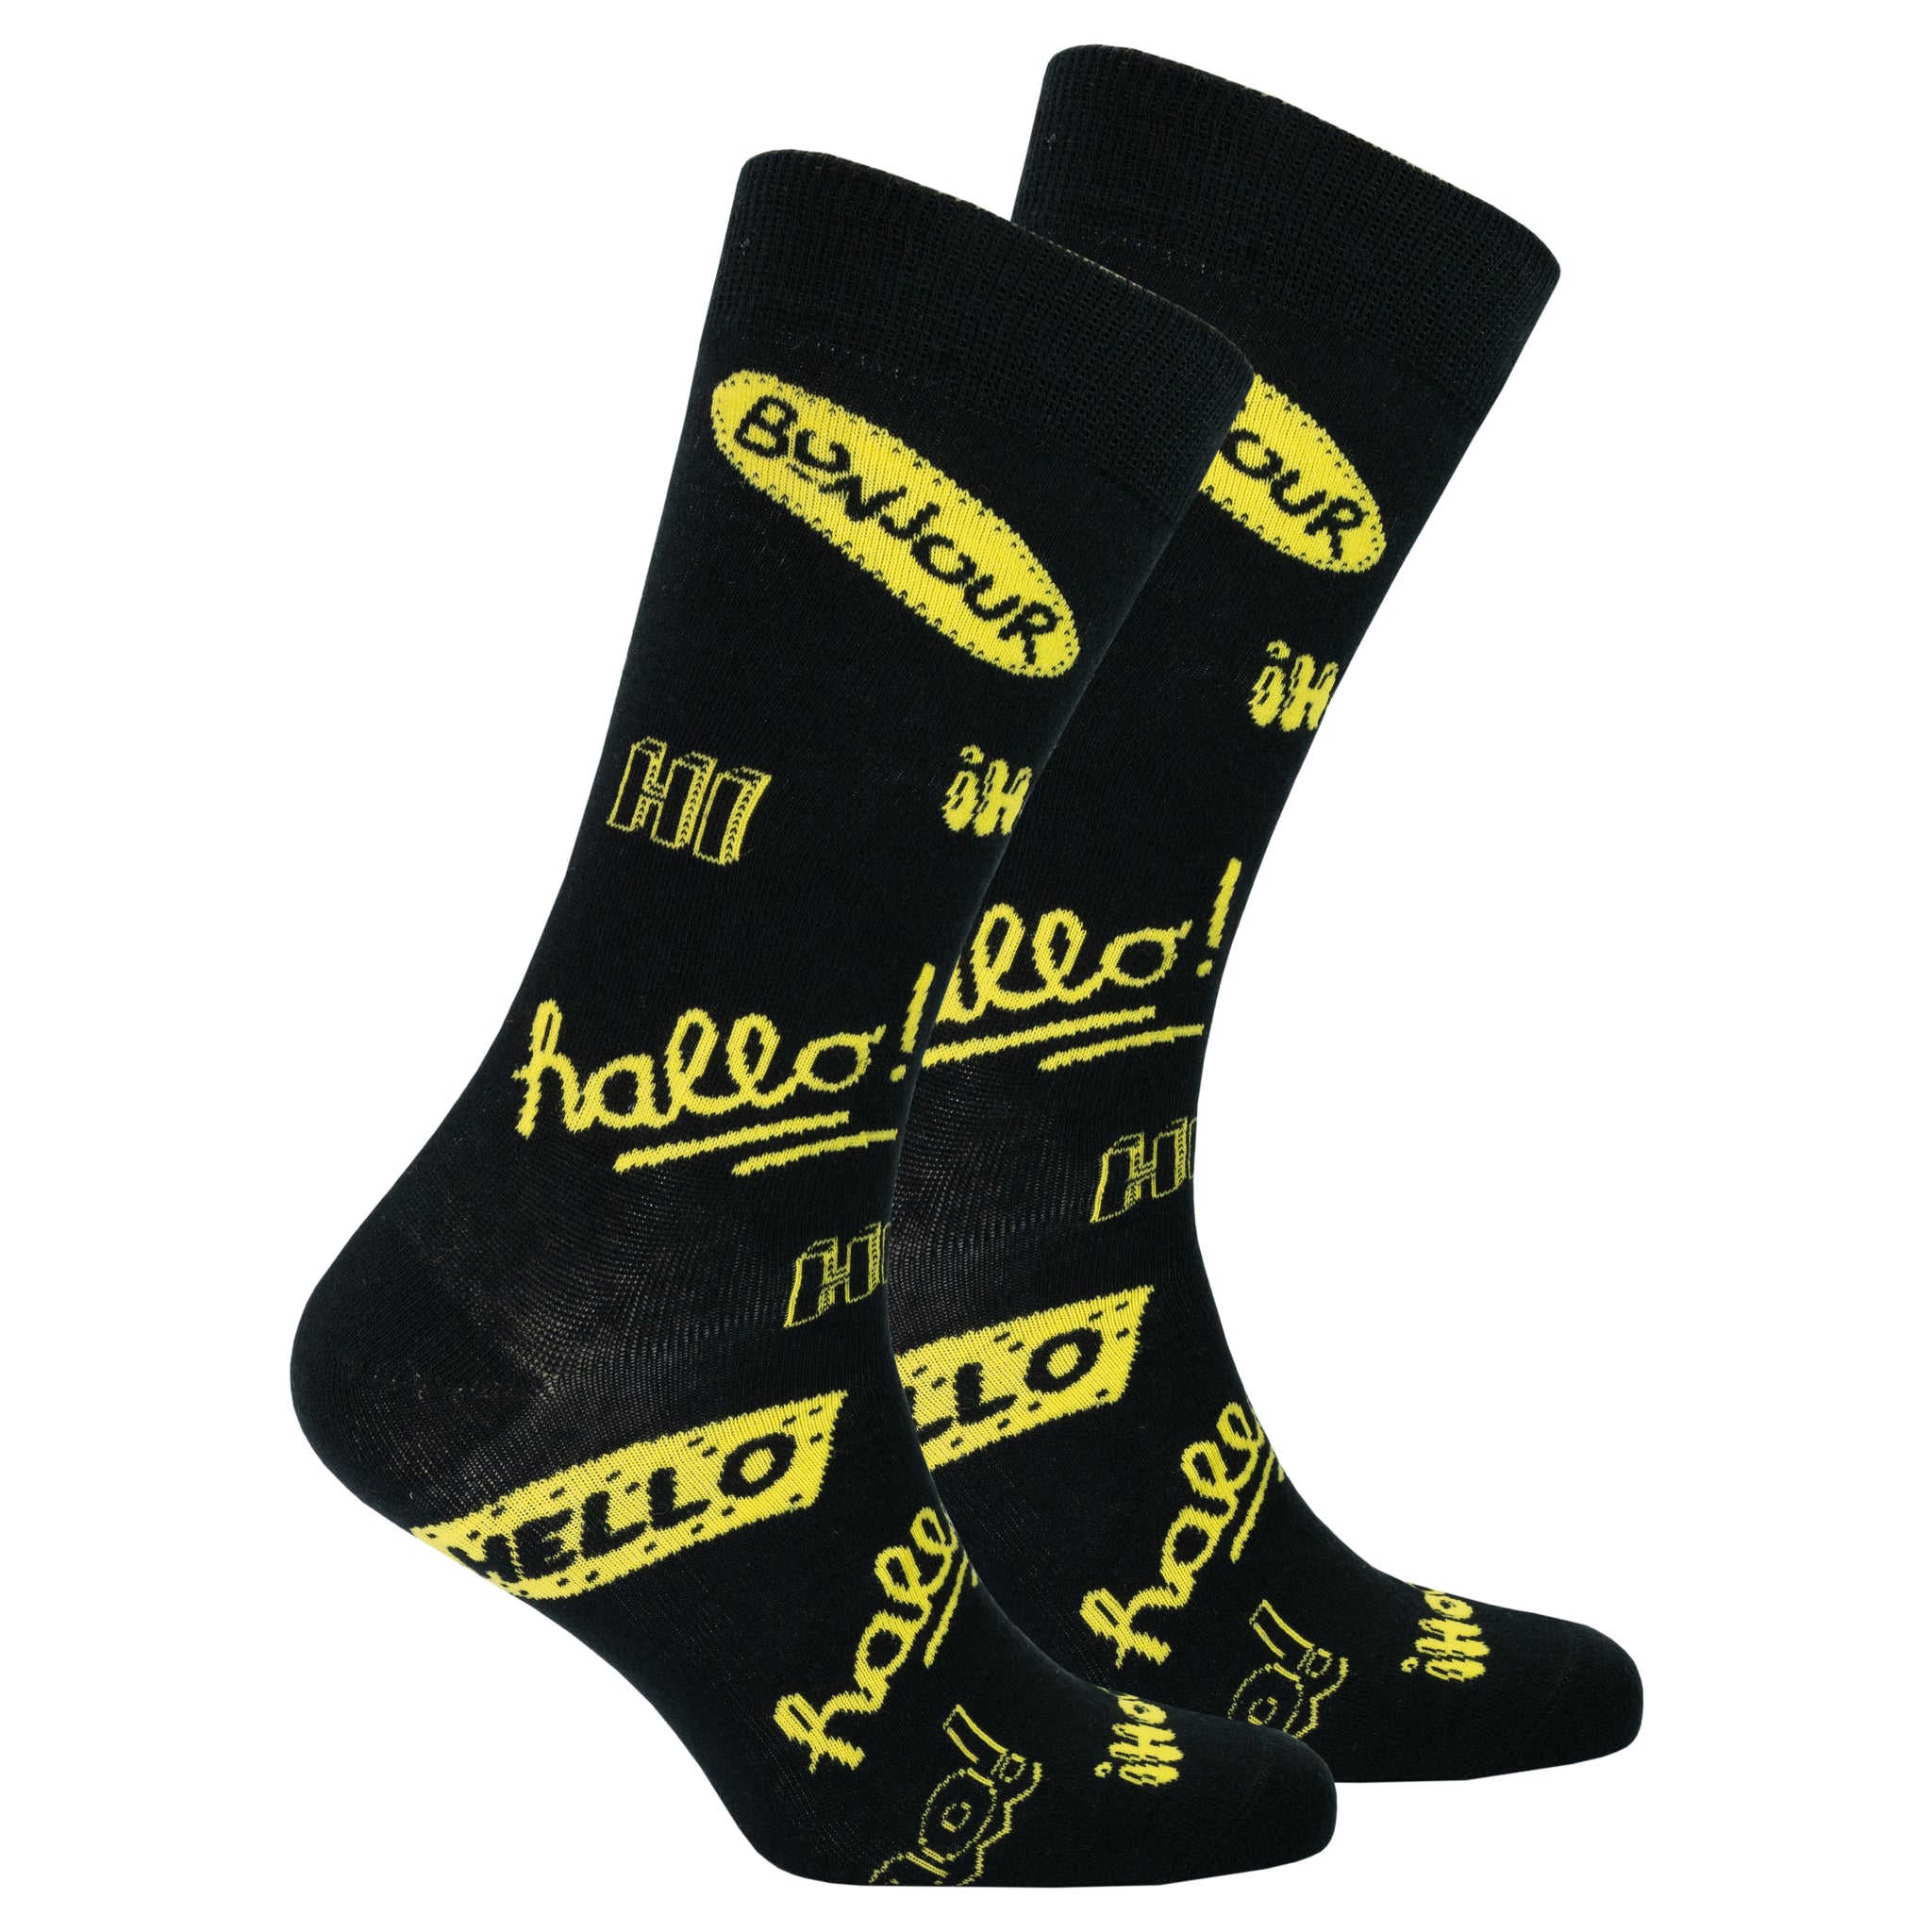 Men's Hello Socks black and yellow